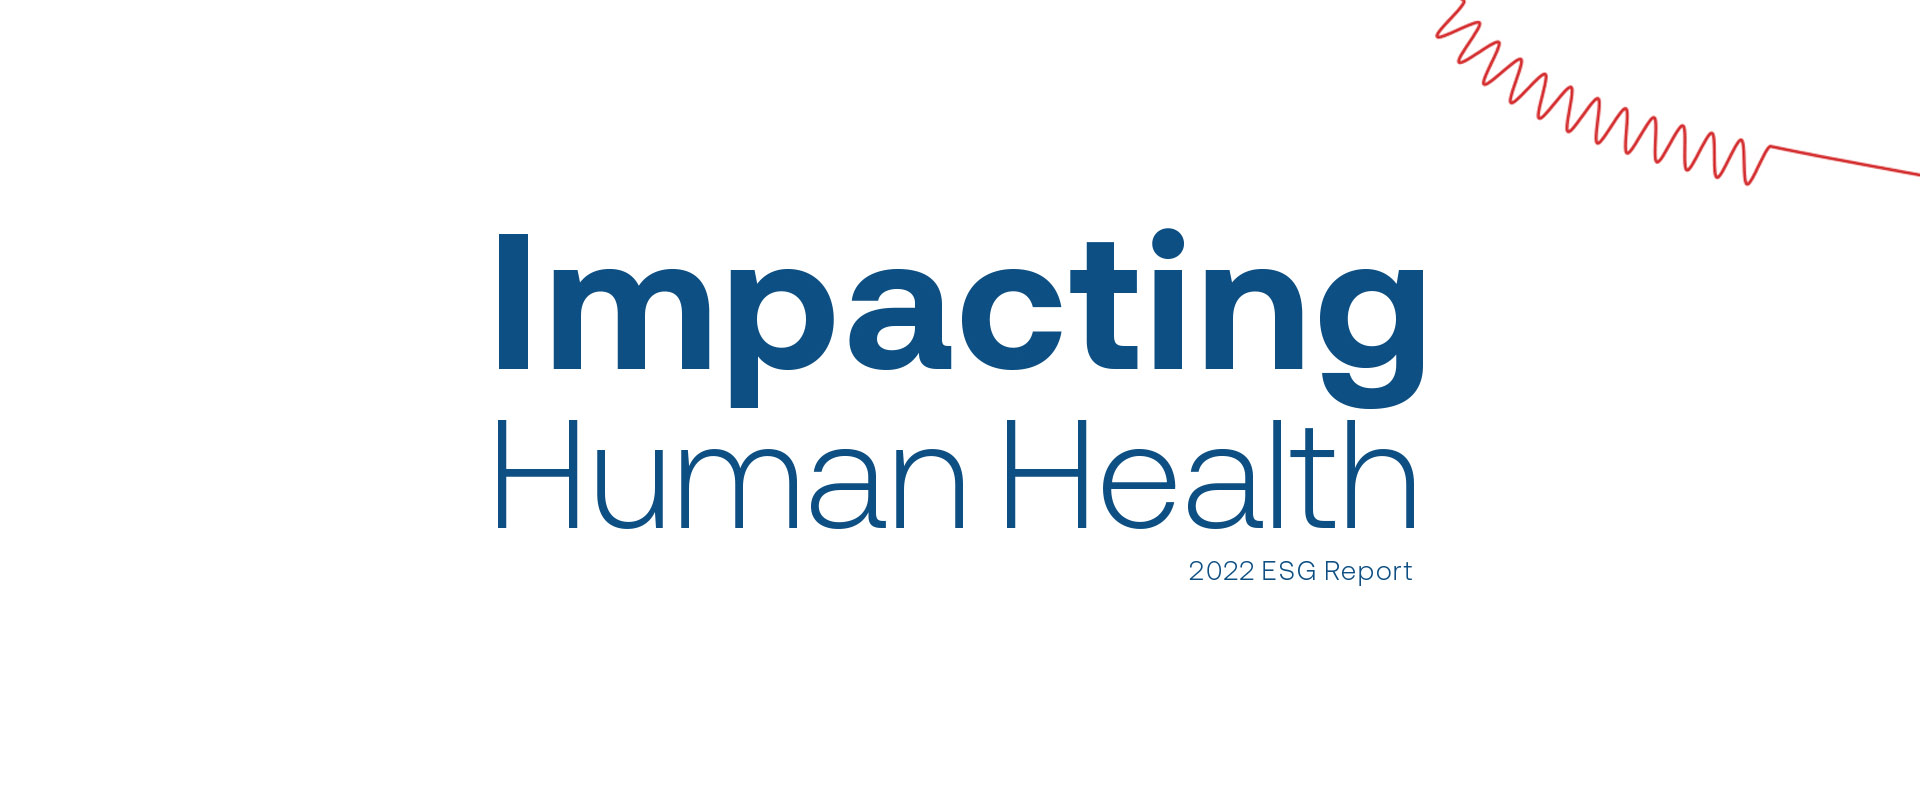 Impacting Human Health: Reflecting on our ESG Progress 